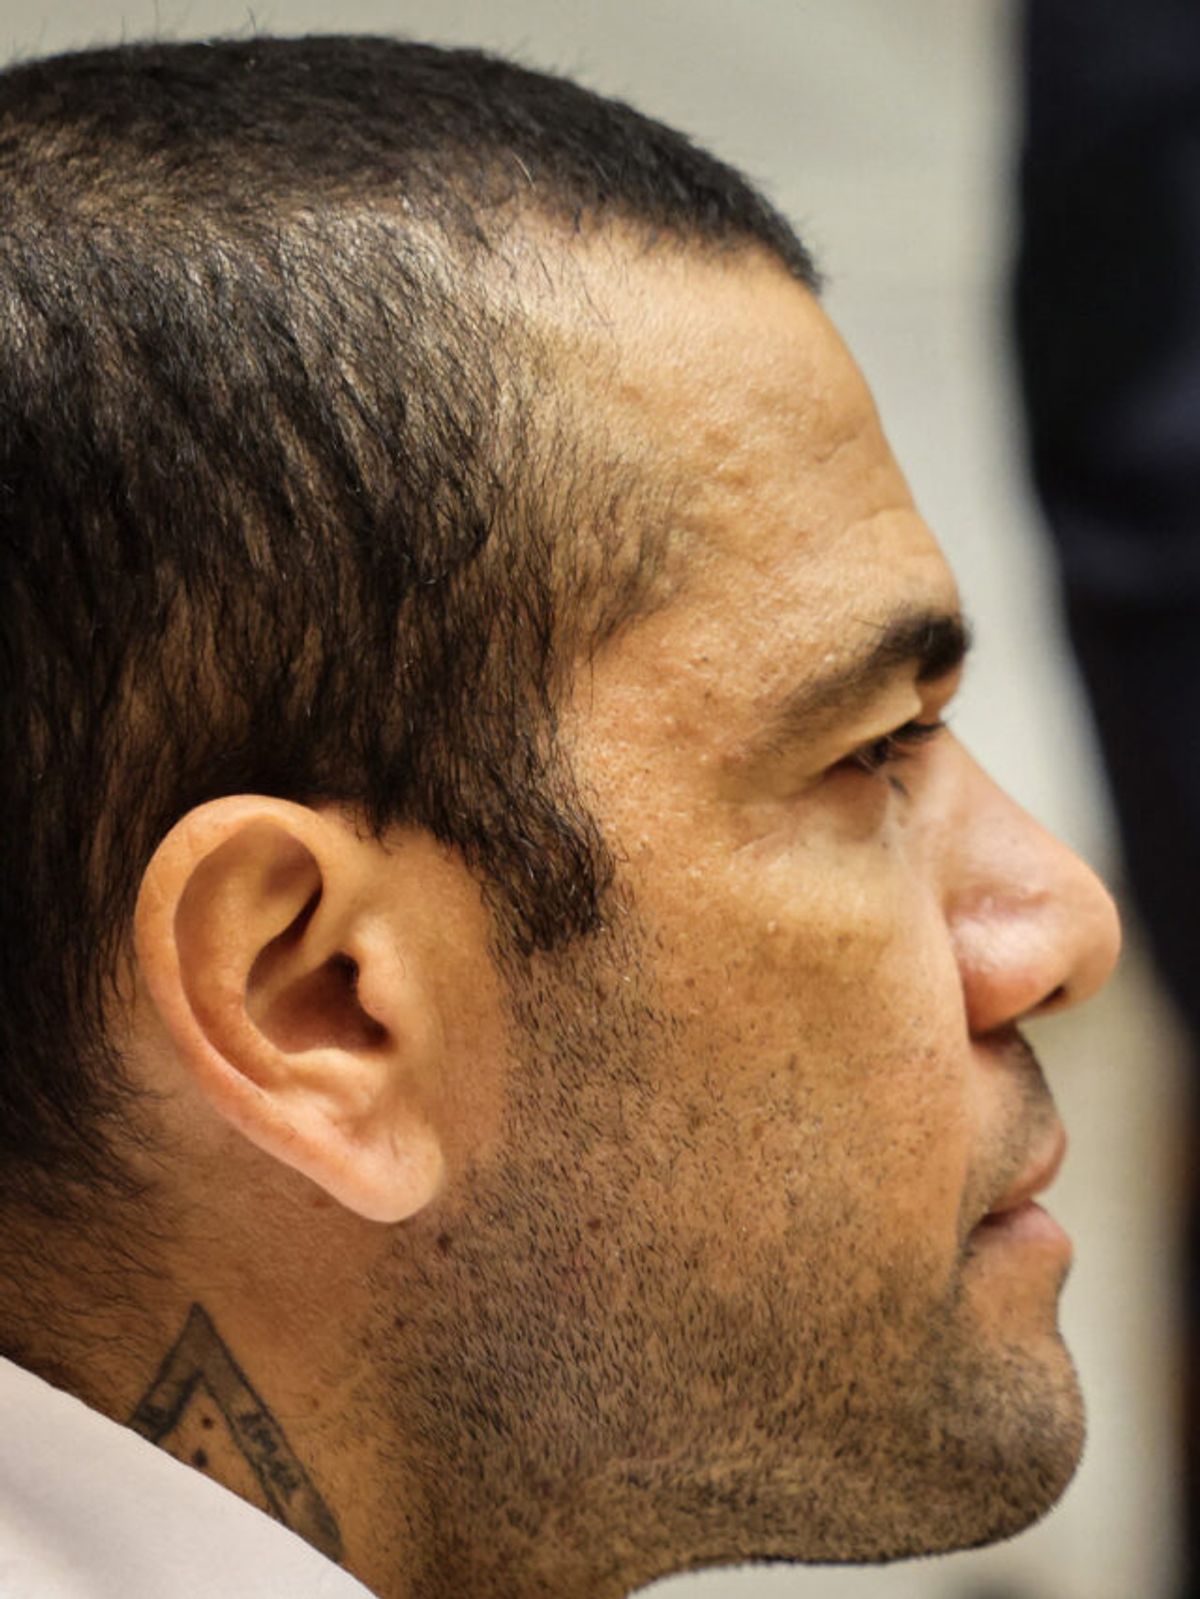 Dani Alves en libertad condicional: víctima señaló decisión como un “baldado de agua fría”